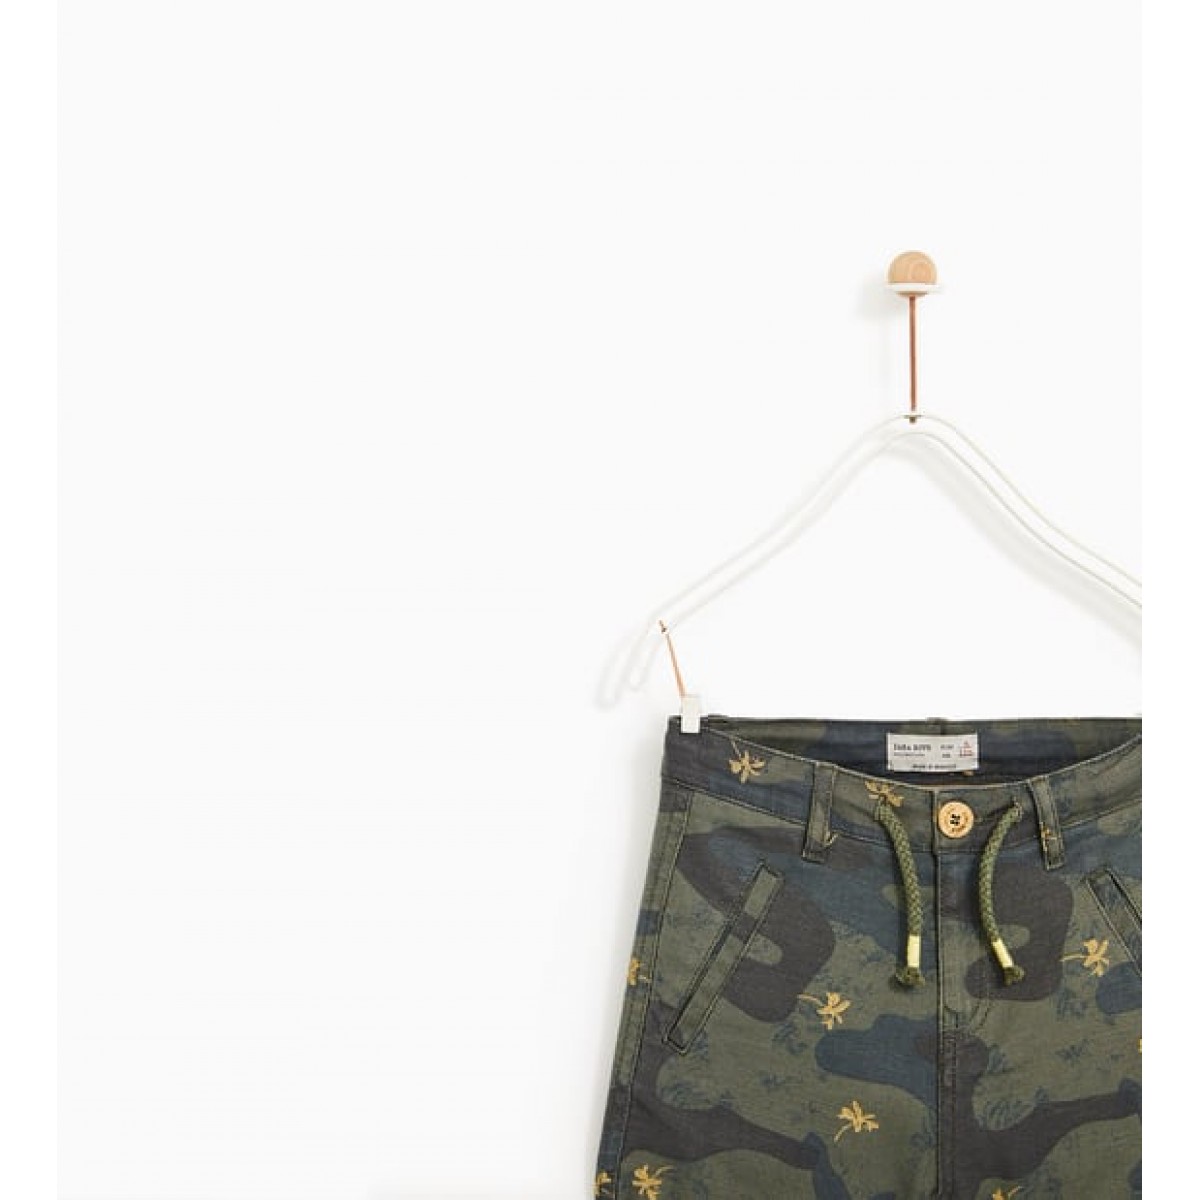 Zara Camouflage Bermuda Shorts